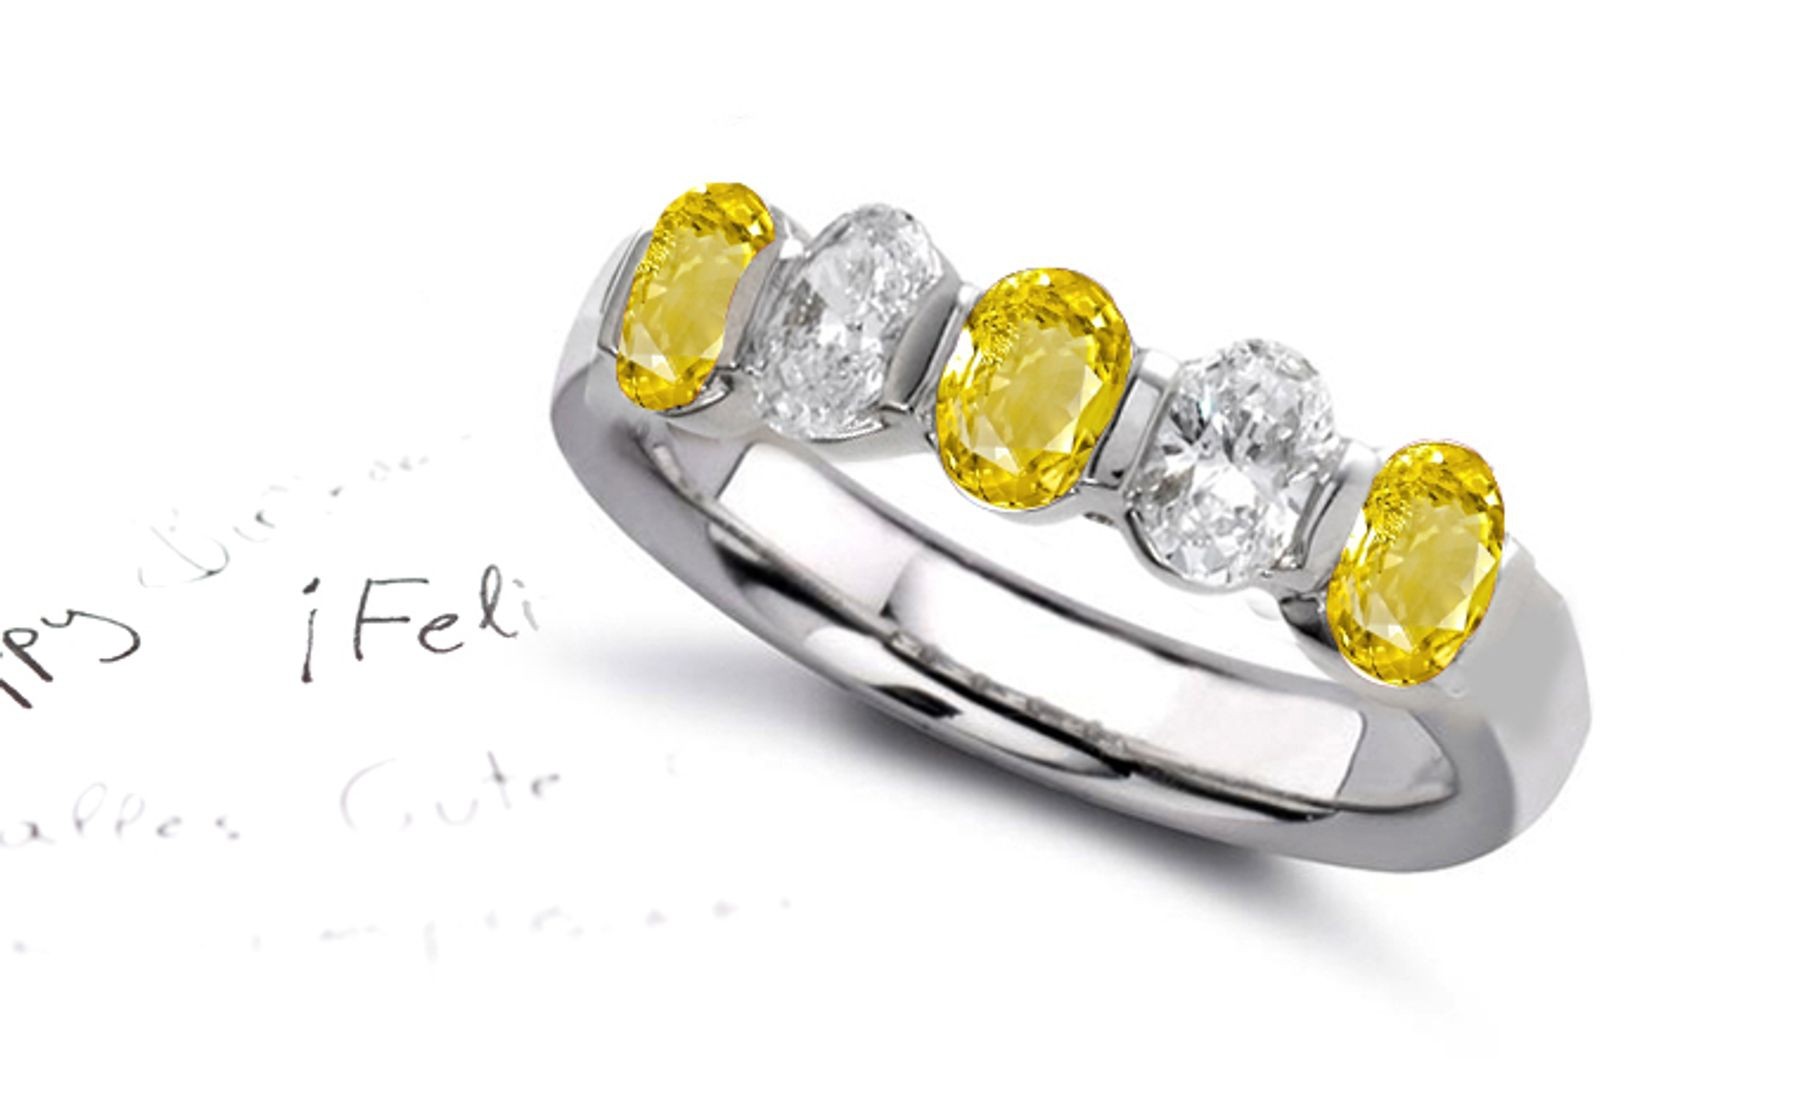 Gem of Gems: Beautiful Yellow Sapphire Diamond Five Stone Anniversary Wedding Ring